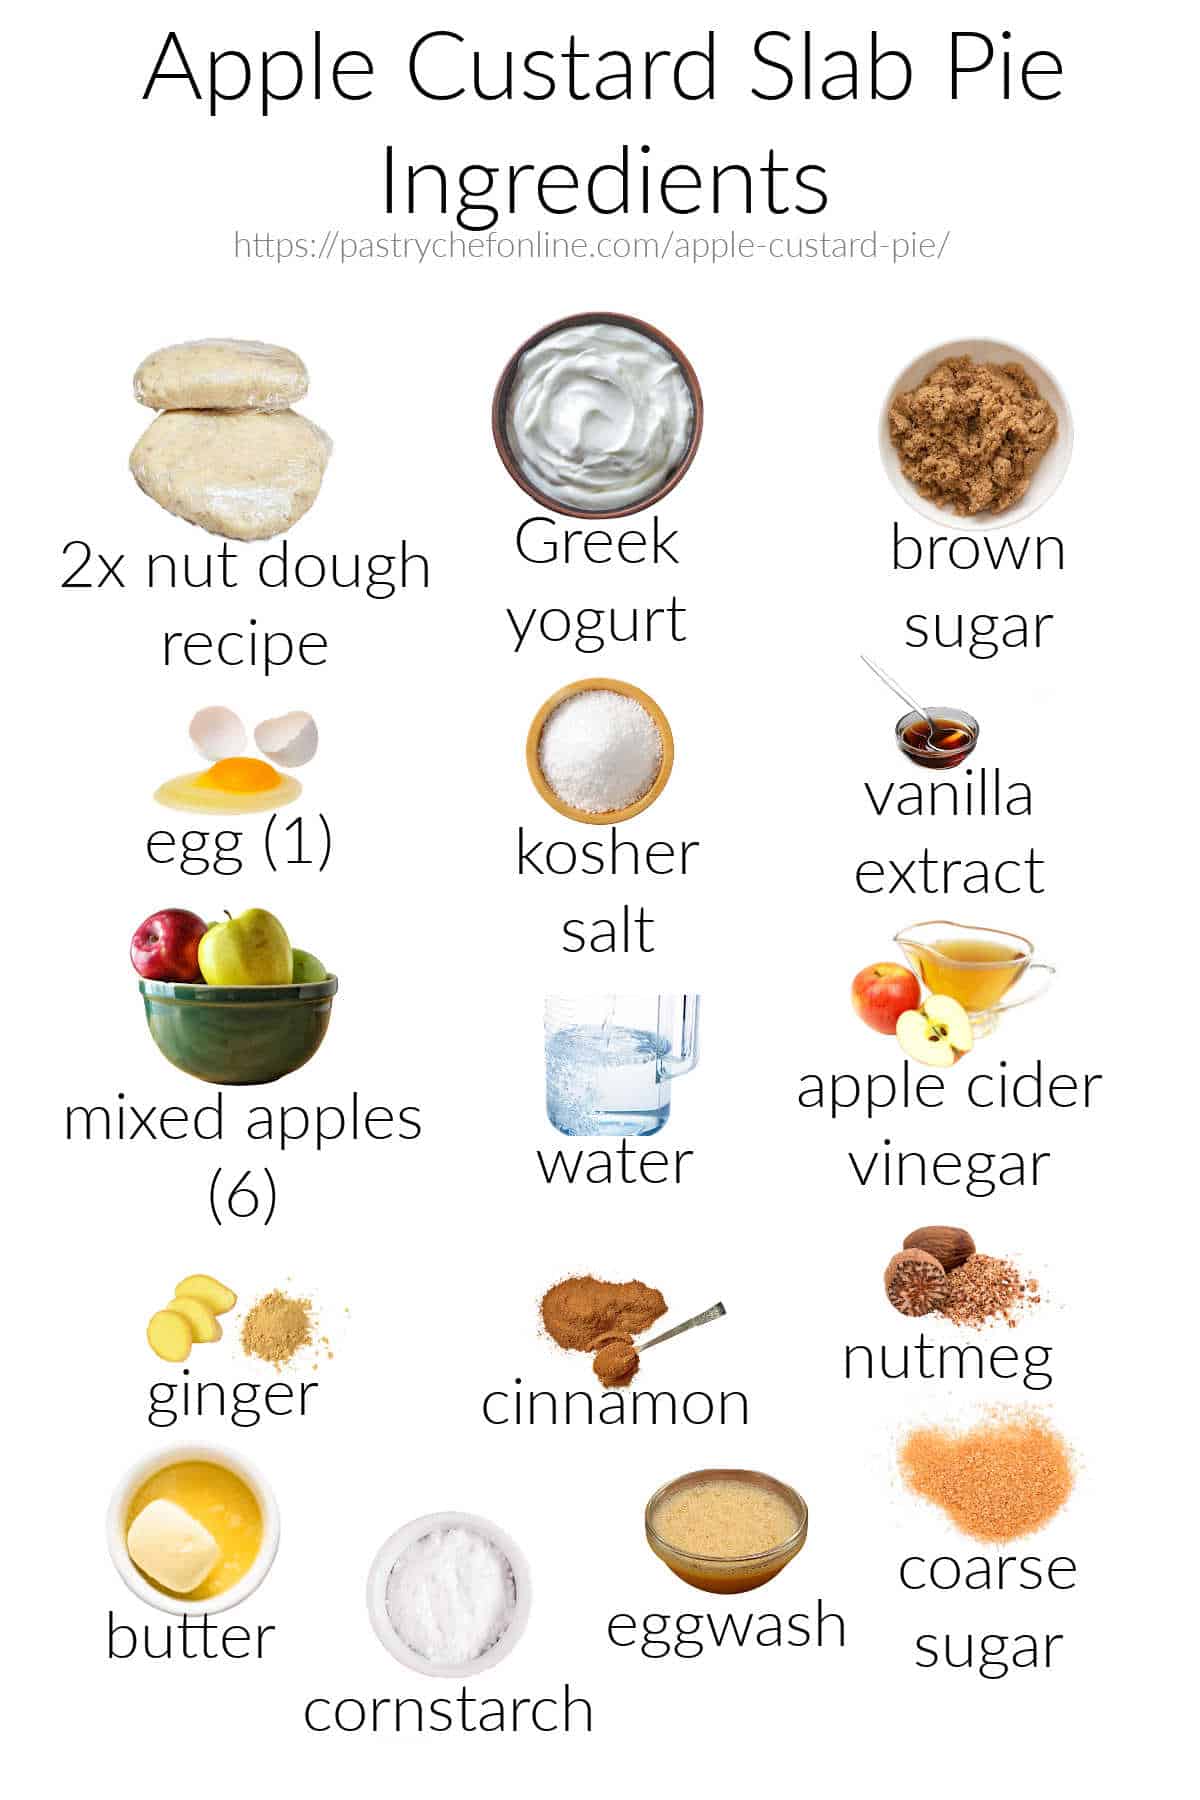 Images of all the ingredients needed to make apple custard pie: nut dough, Greek yogurt, brown sugar, egg, salt, vanilla, mixed apples, water, apple cider vinegar, ginger, cinnamon, nutmeg, butter, cornstarch, eggwash, and coarse sugar.